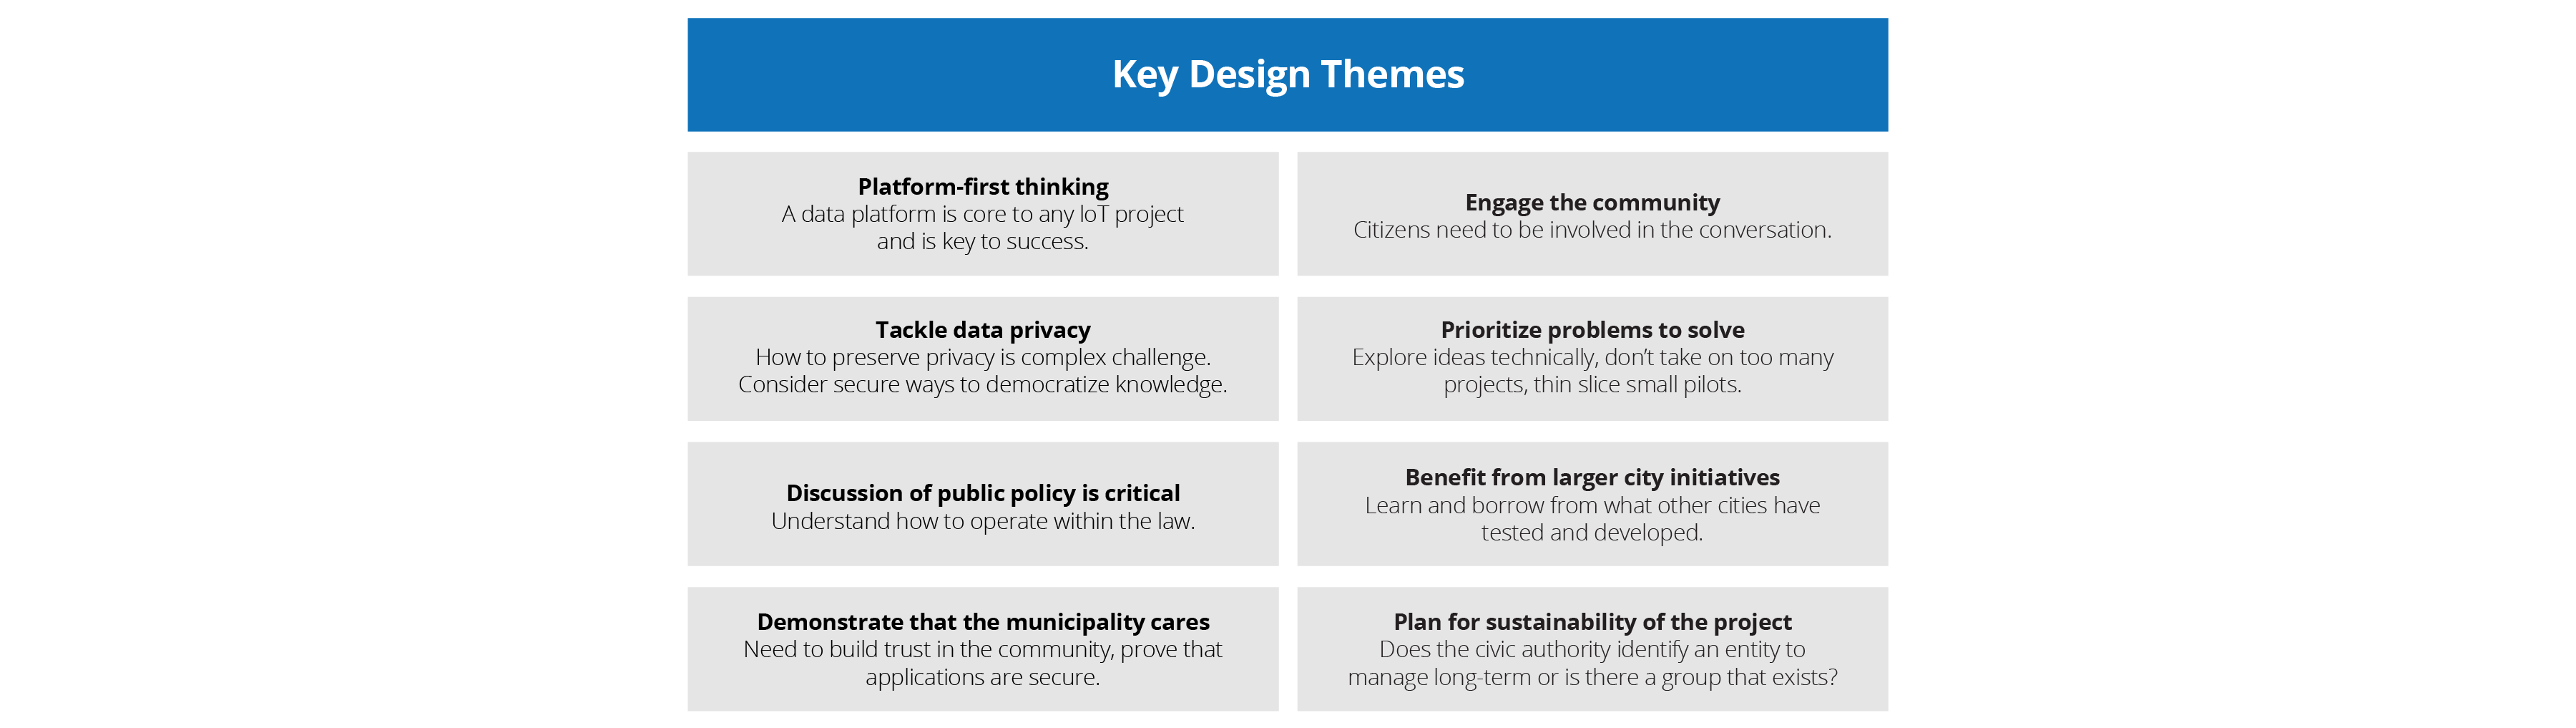 Key design themes